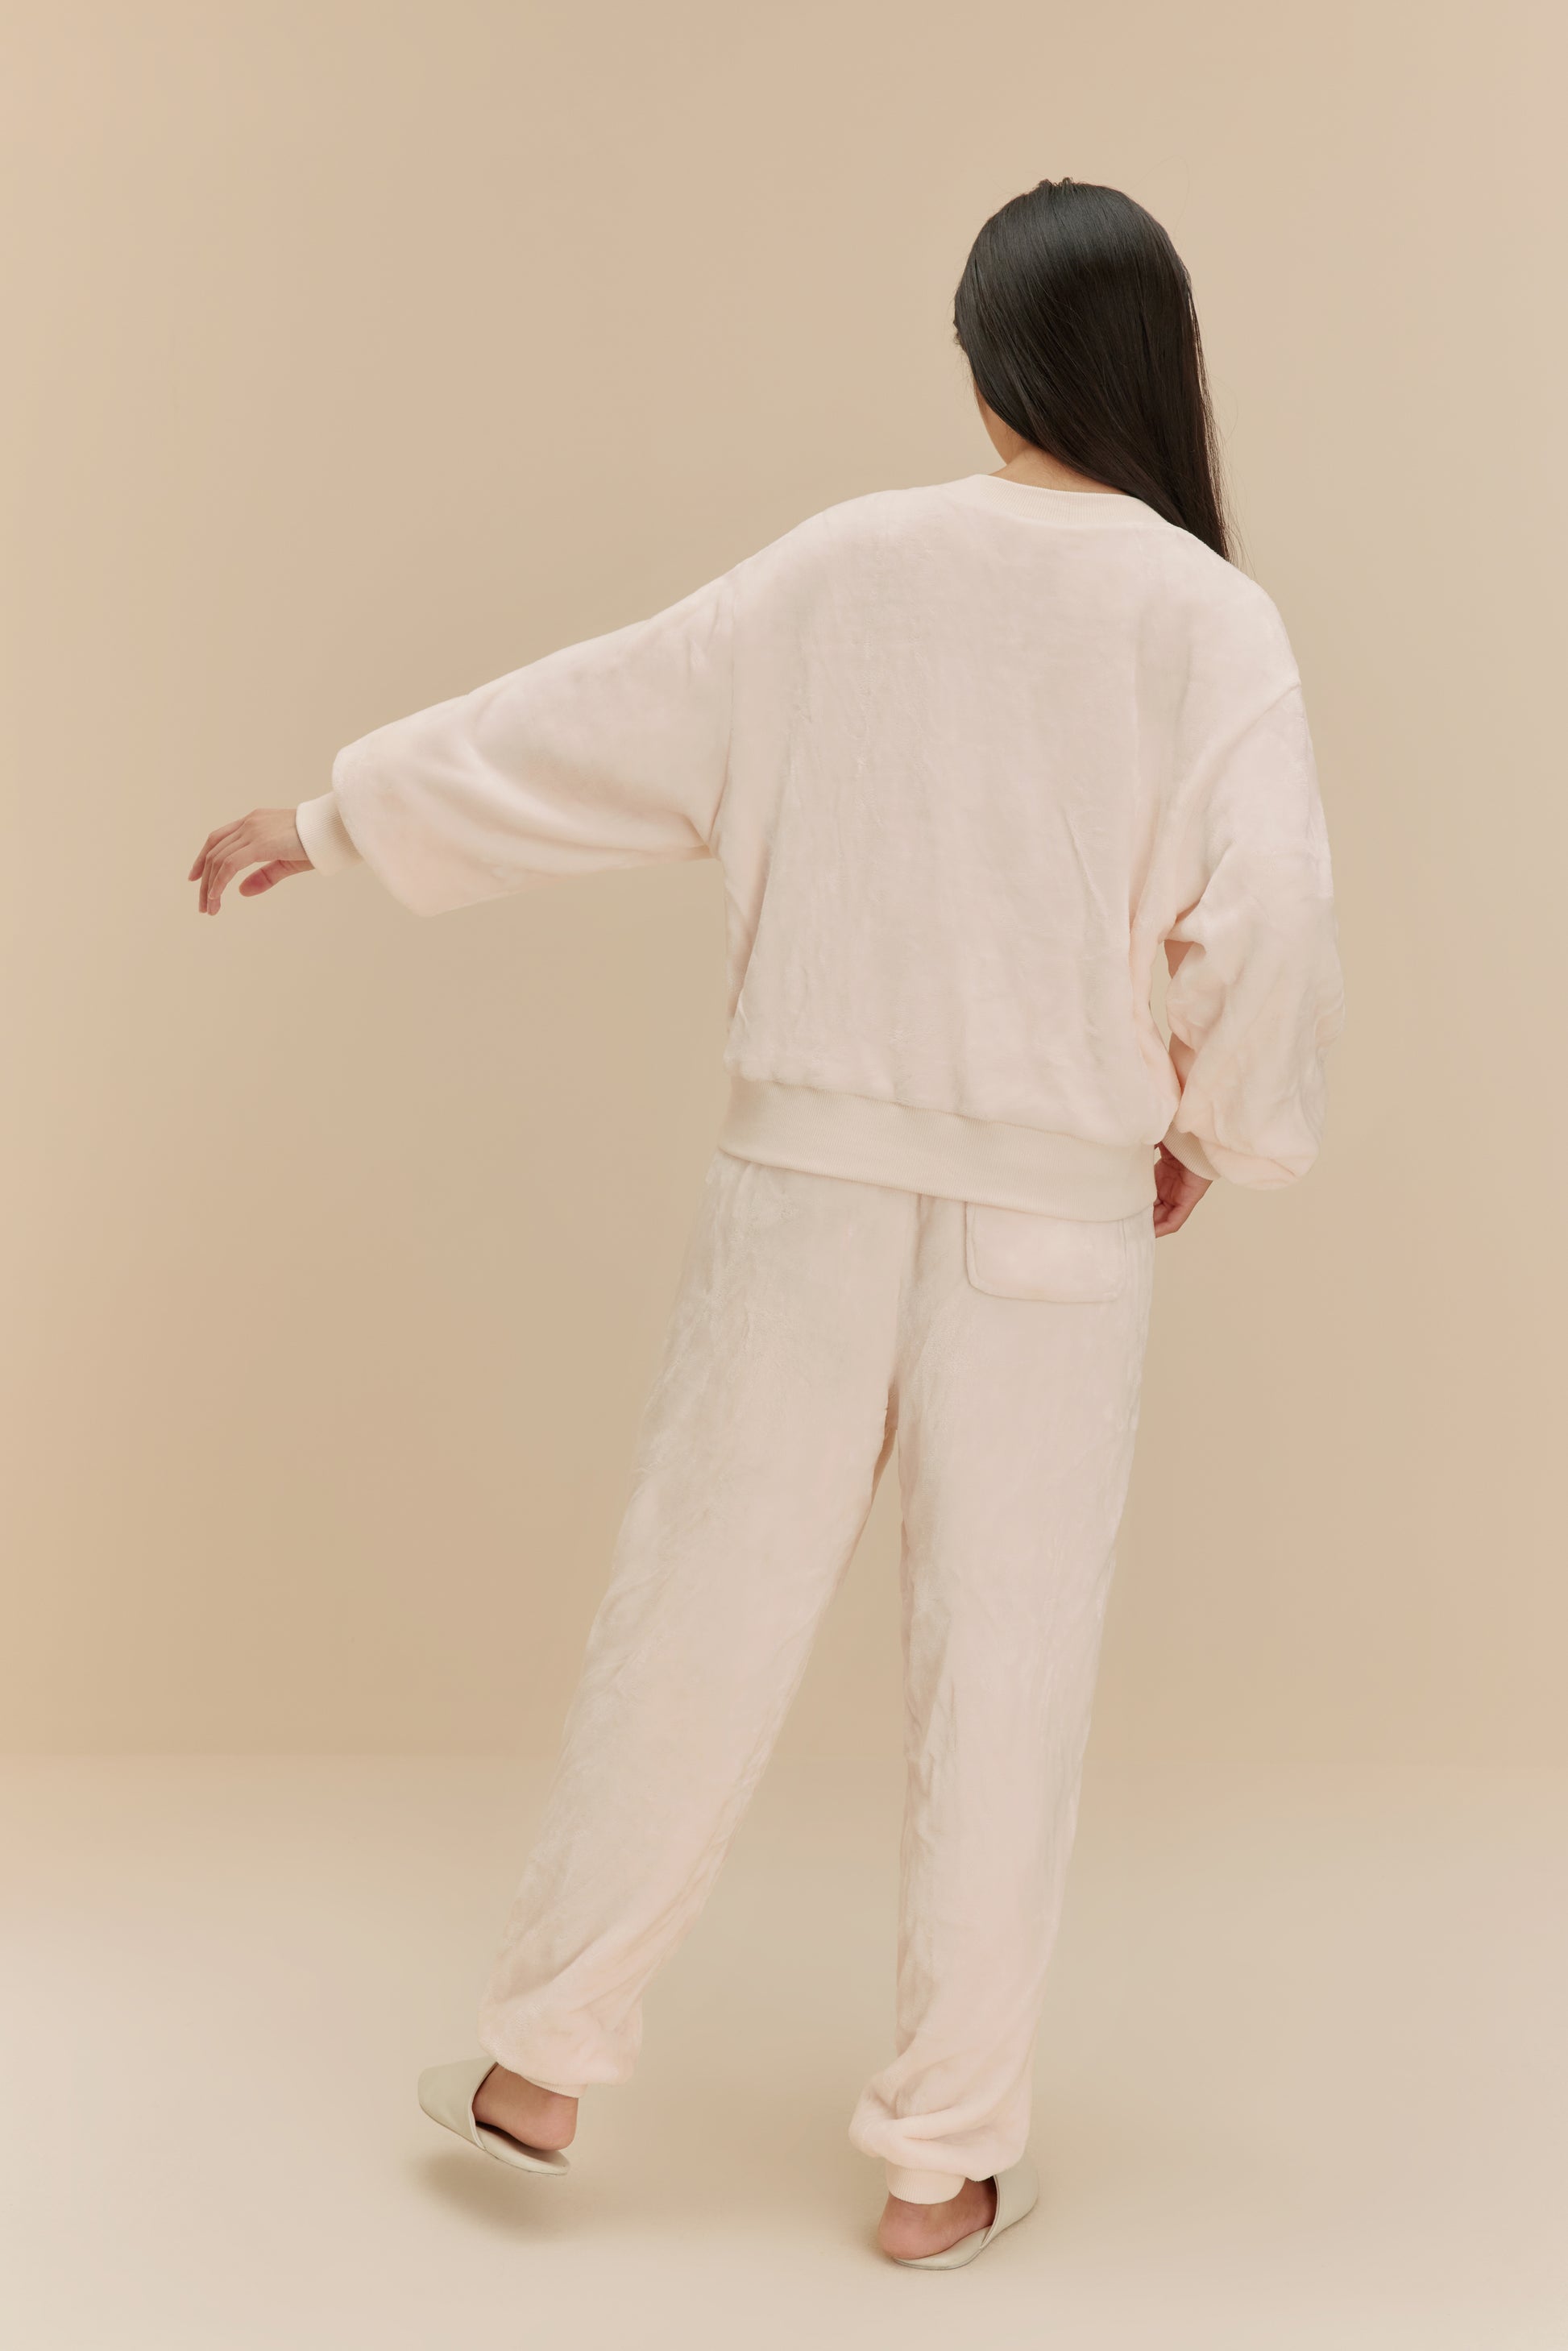 woman wearing white fleece pajama set from back